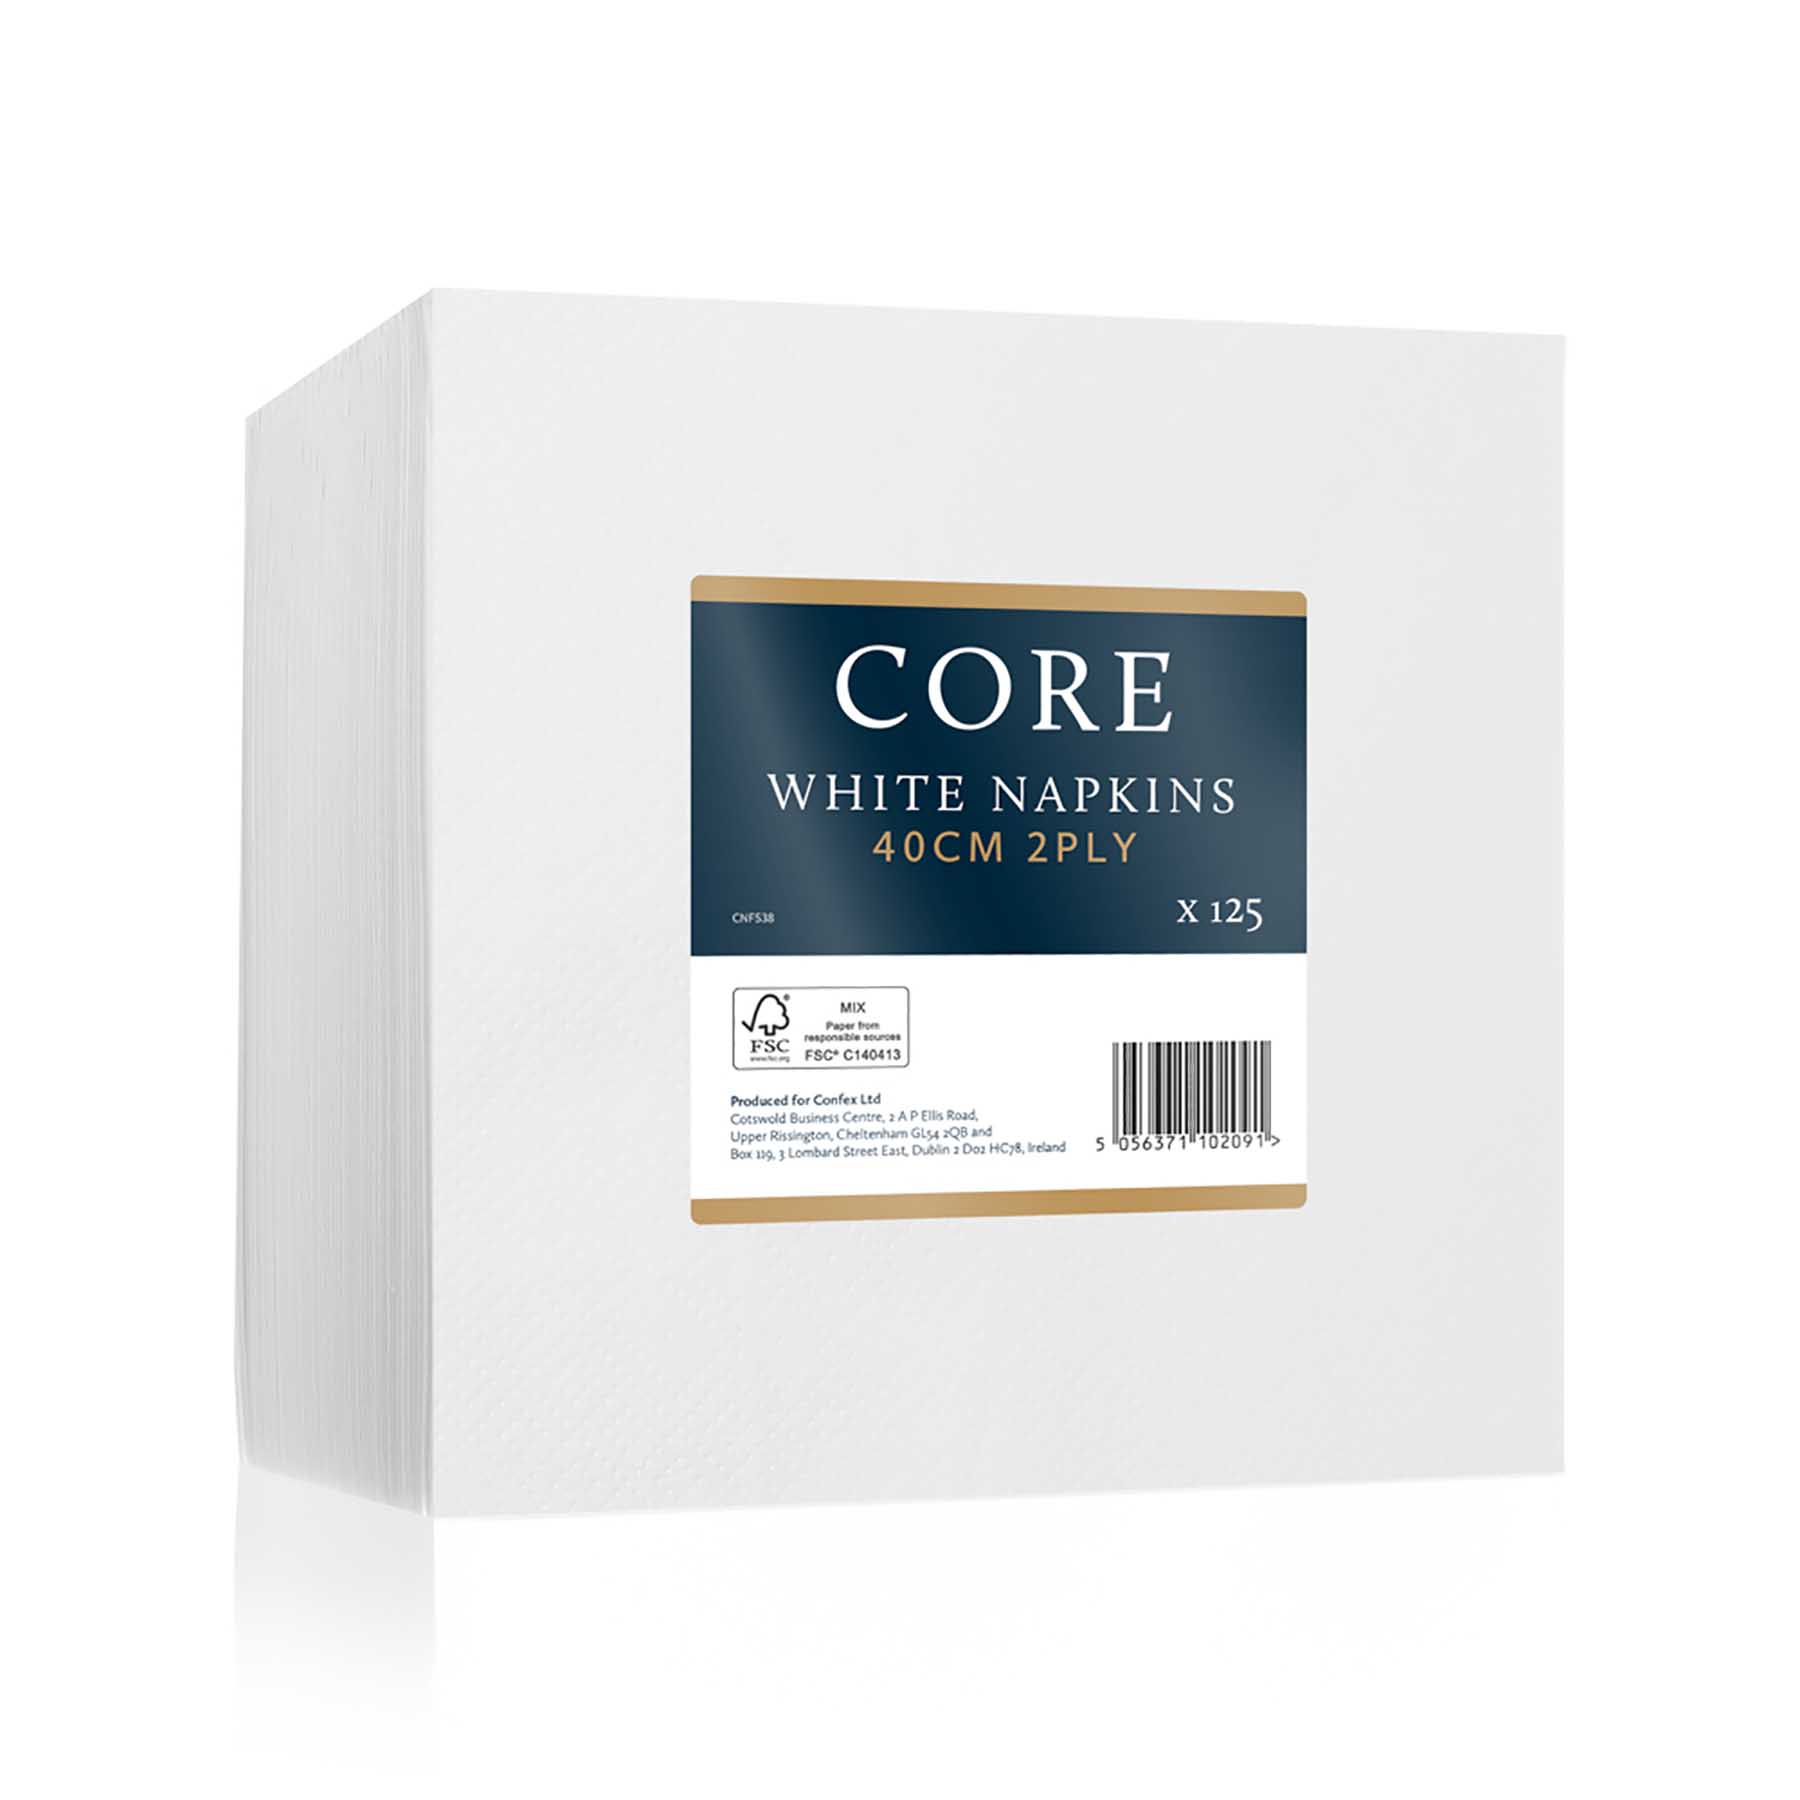 Core 40cm 2ply White Napkins x125